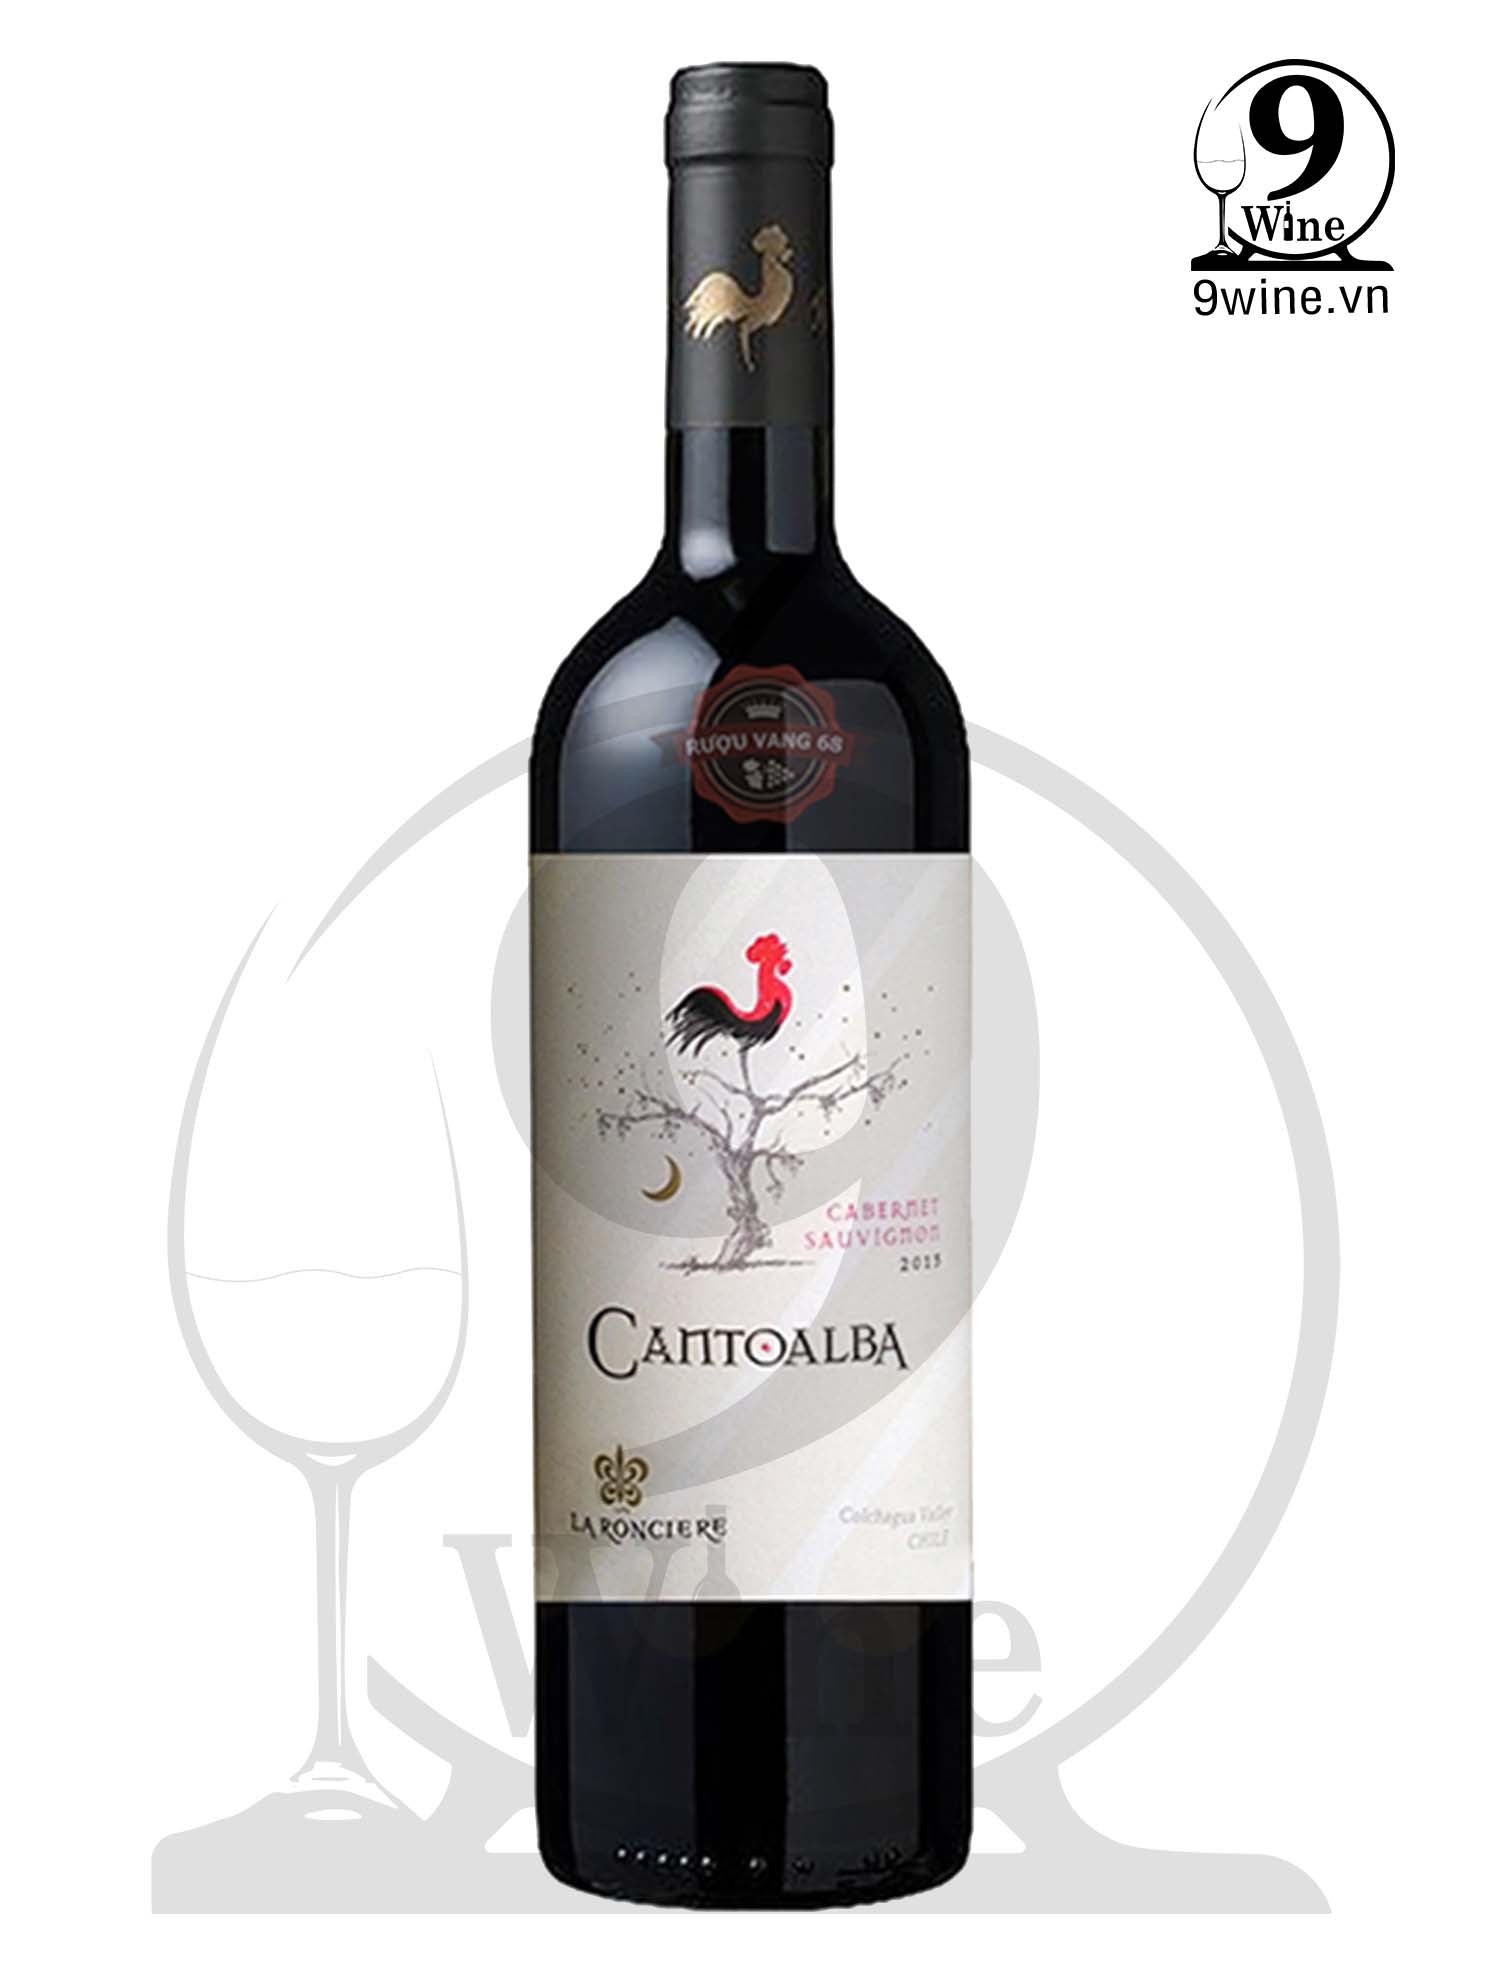 Rượu Vang Cantoalba Cabernet Sauvignon